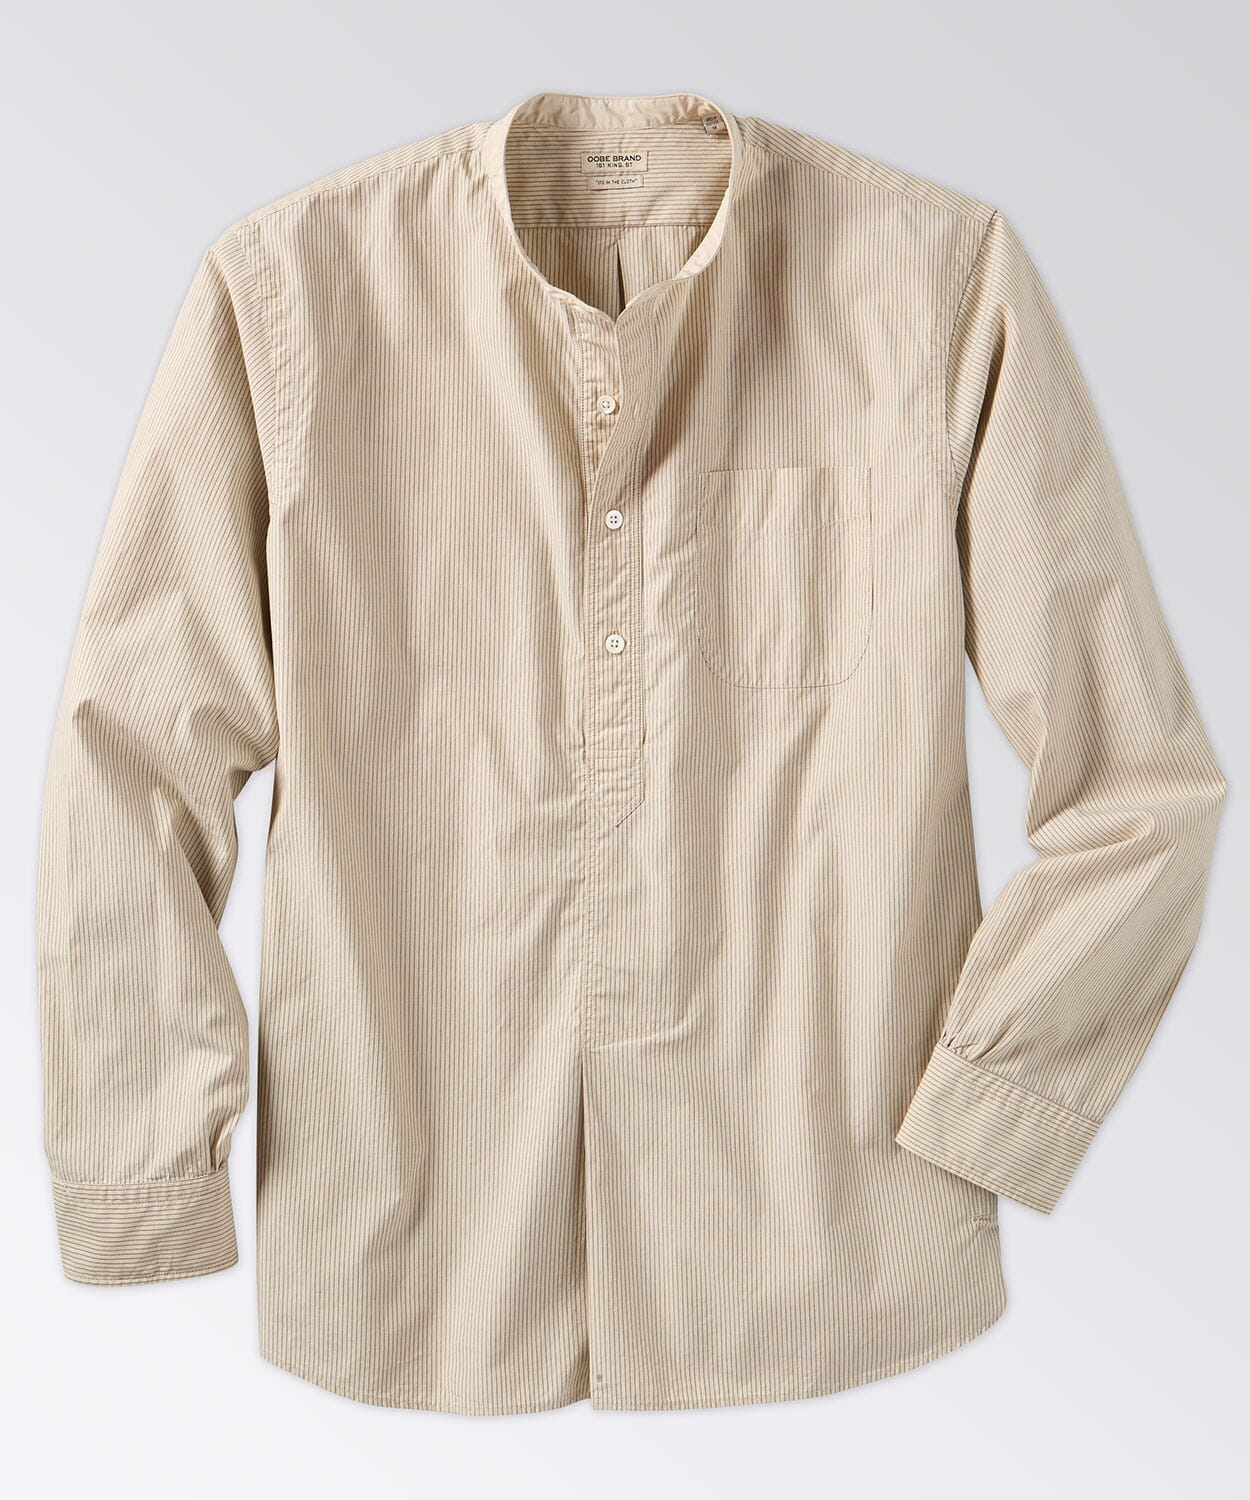 Rowan Shirt Button Downs OOBE BRAND Vintage Pinstripe S 